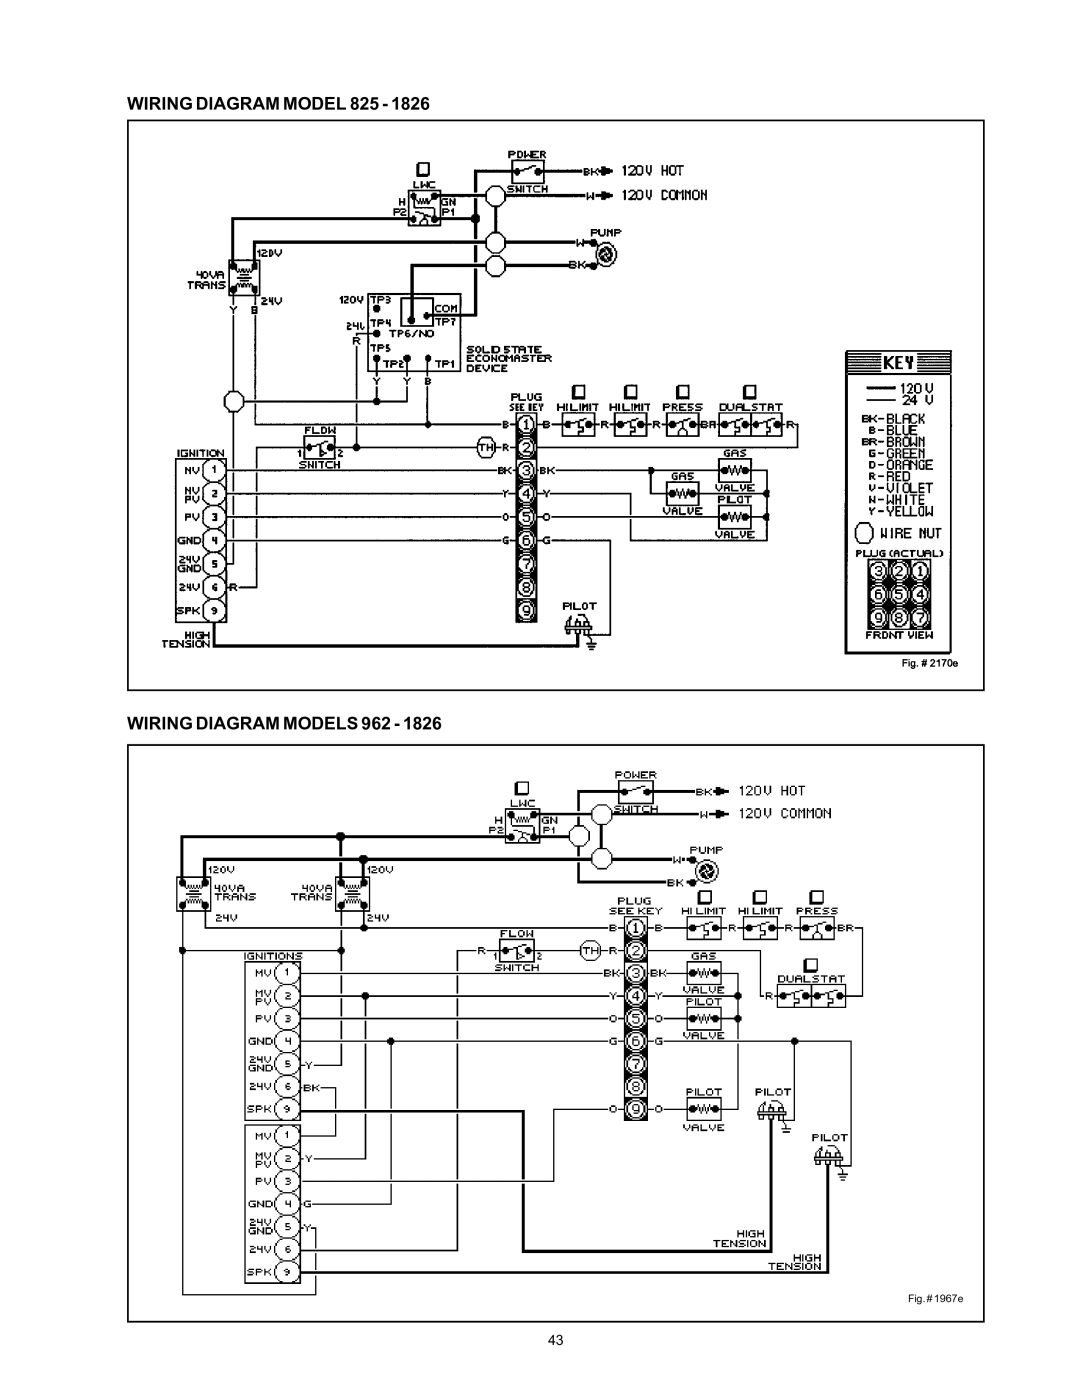 Rheem 136-1826 installation instructions Wiring Diagram Model 825 Wiring Diagram Models 962, Fig. # 1967e 